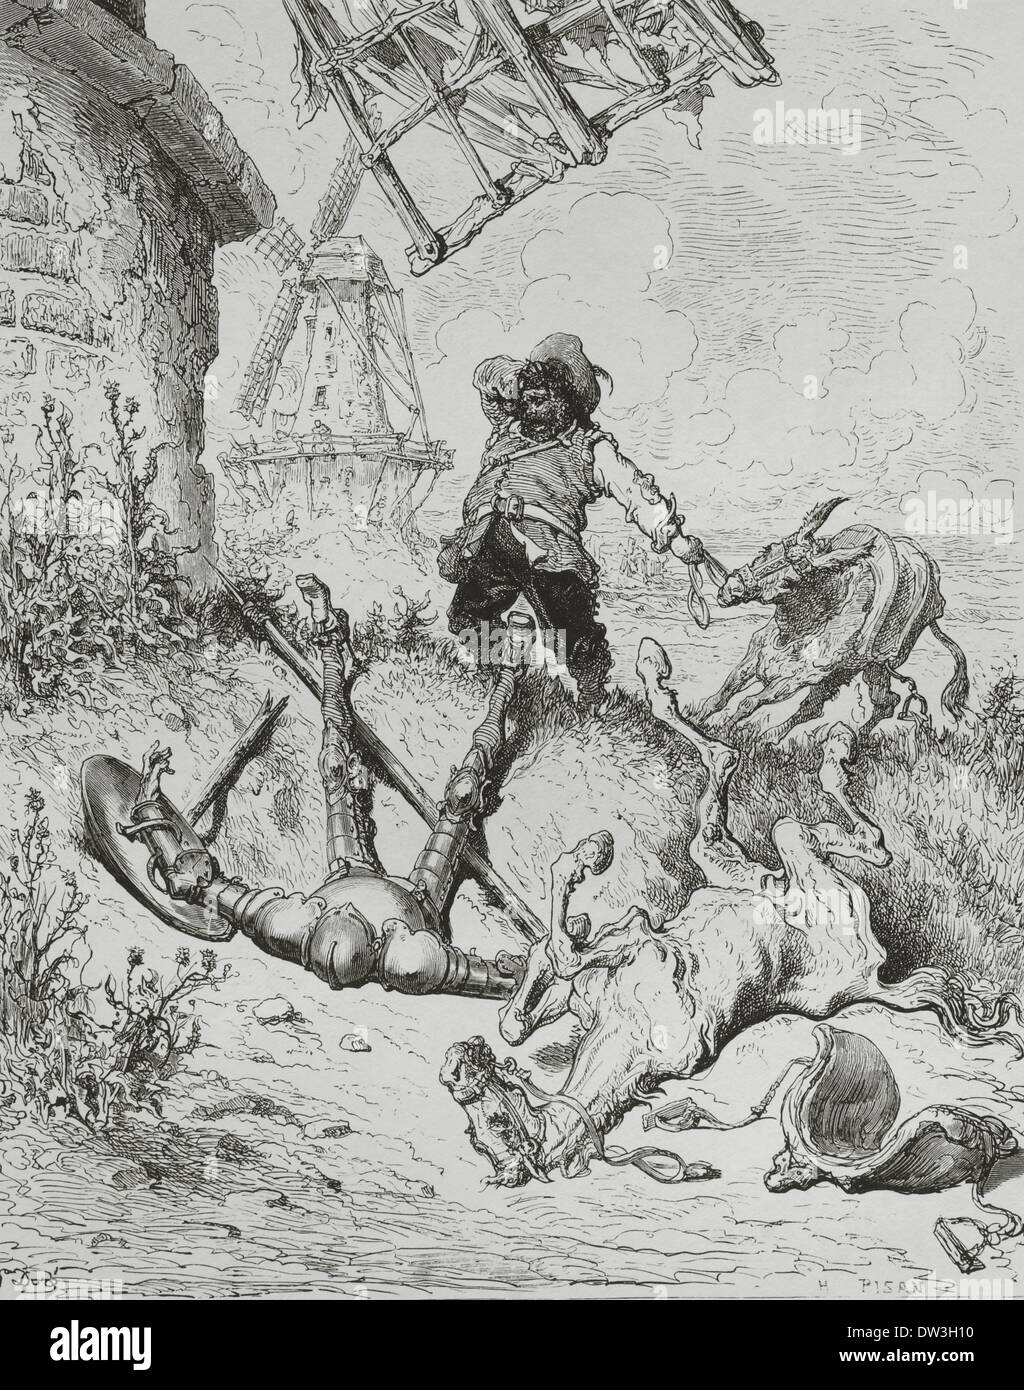 Don Quixote by Miguel de Cervantes. Sancho comes to Don Quixote's aid (part I, 8). Engraving by Gustave Dore, 19th century. Stock Photo